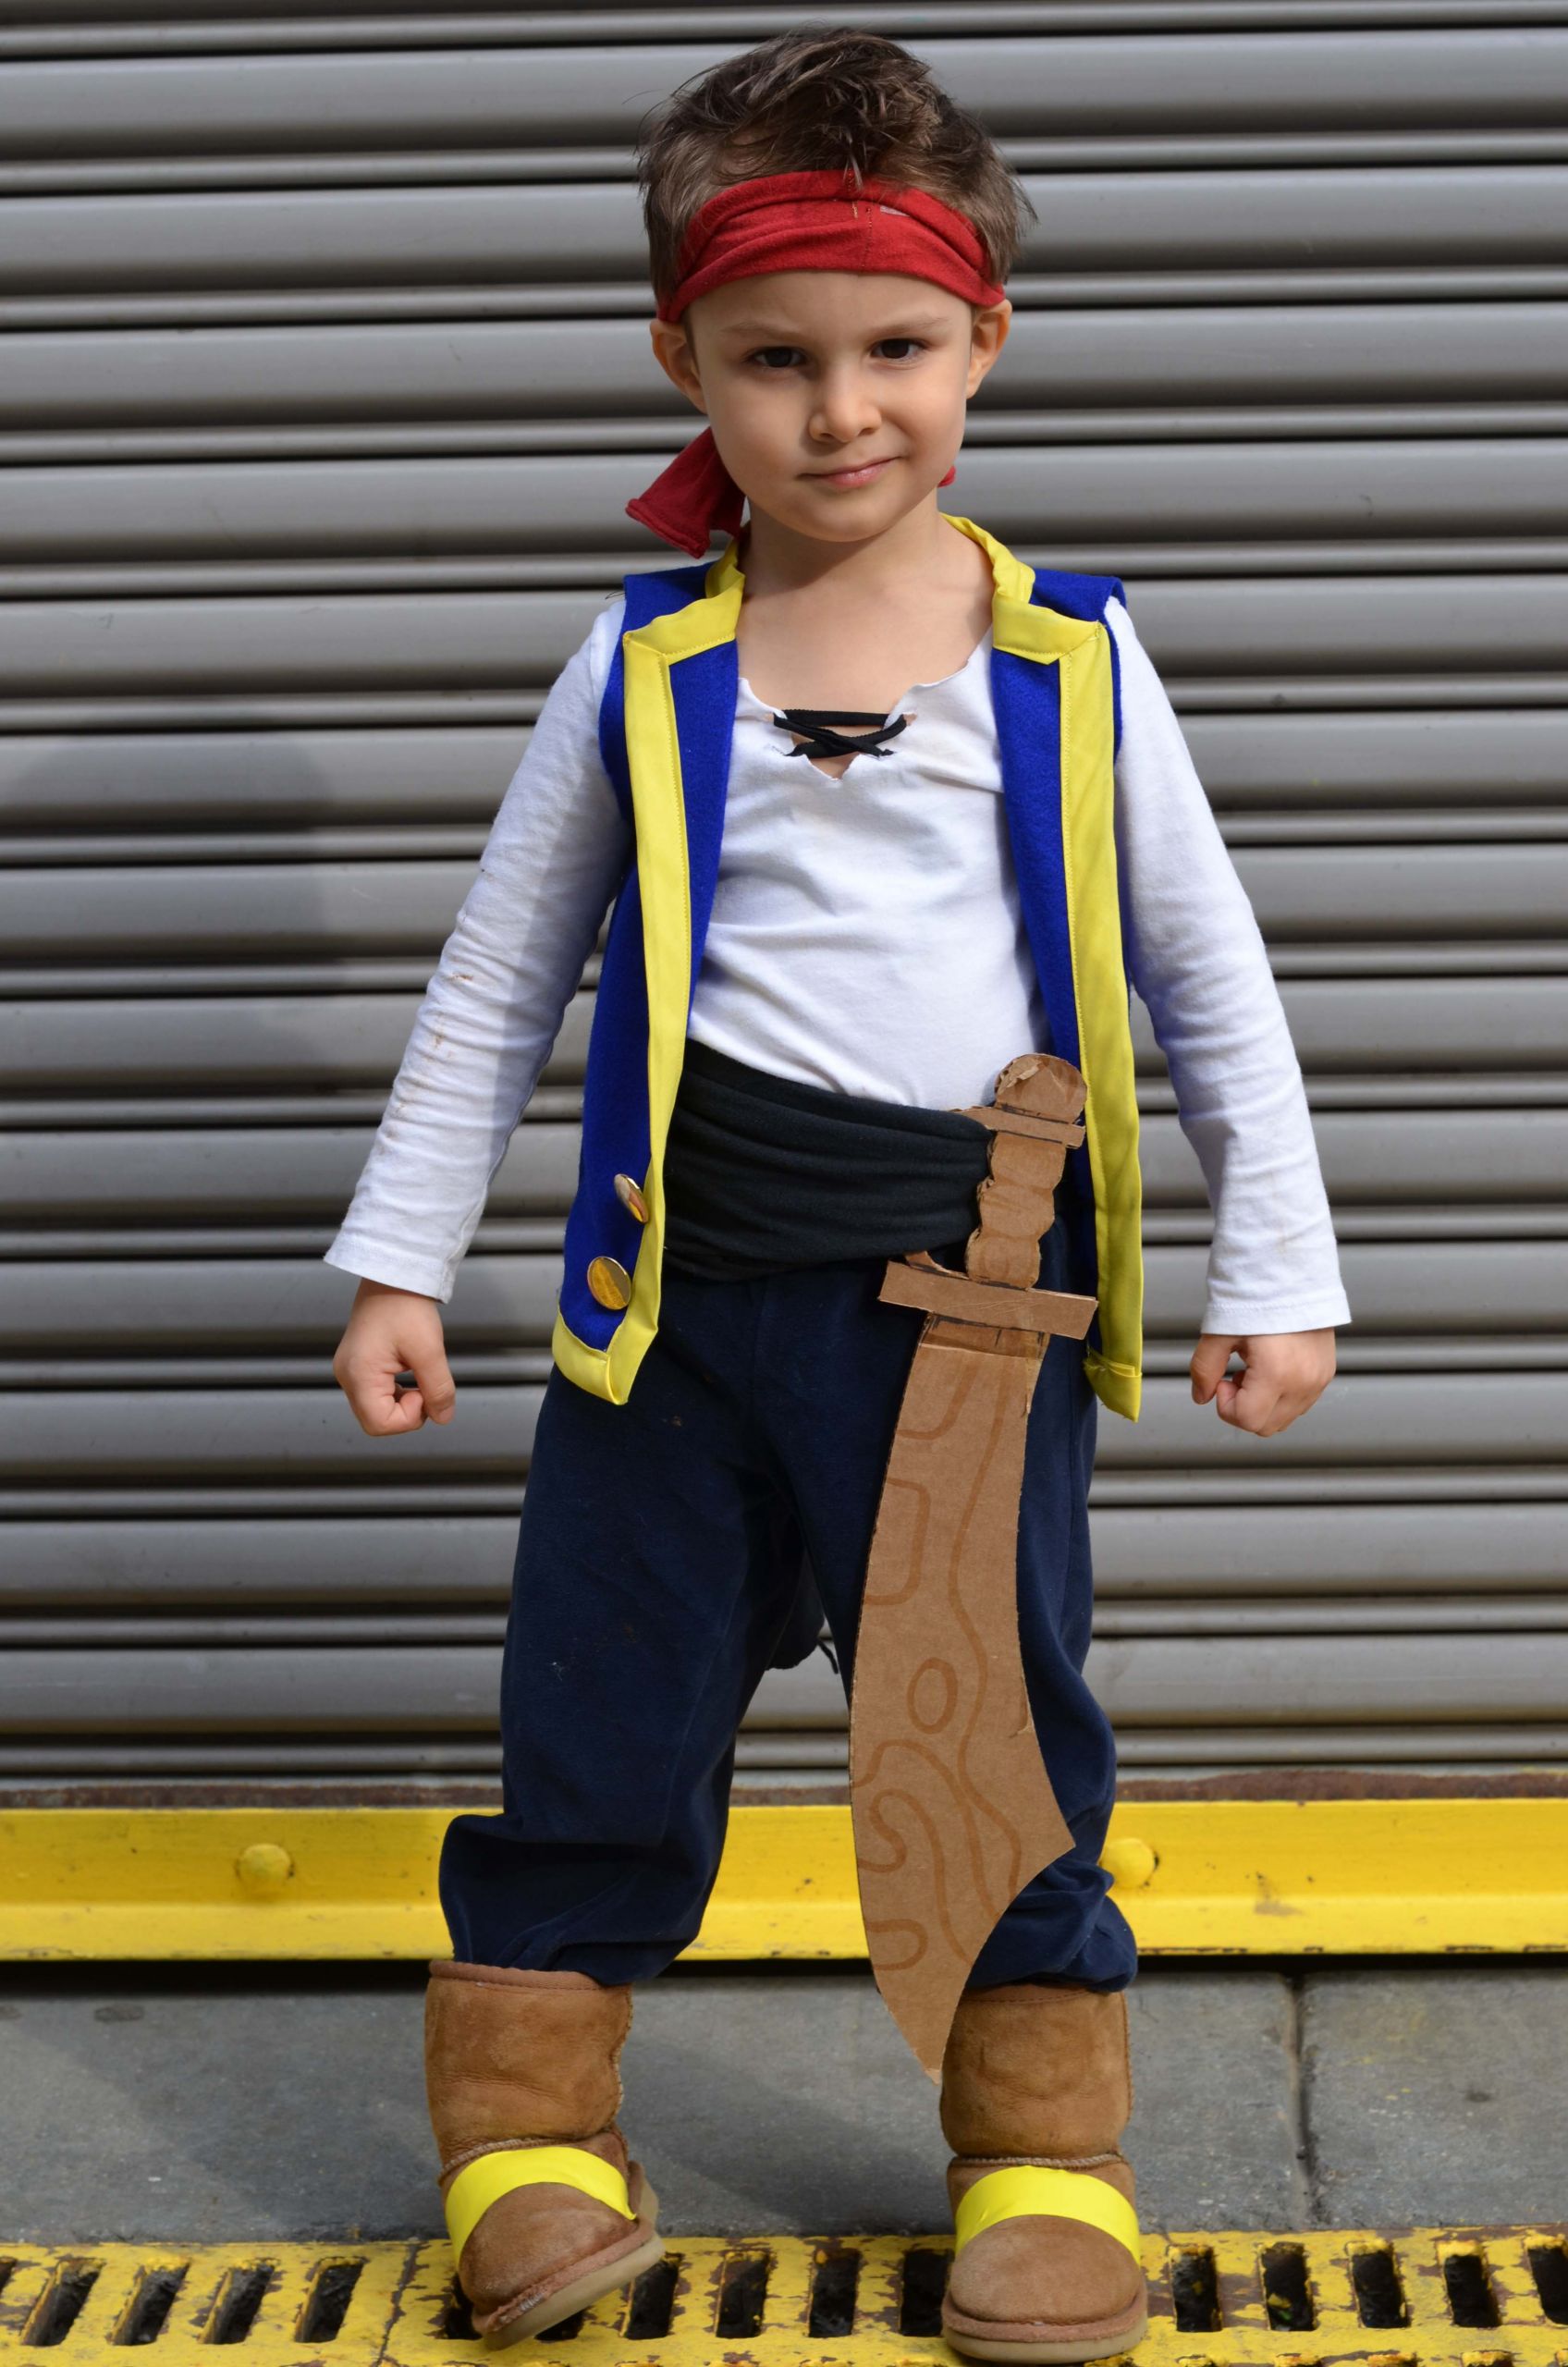 Diy Child Pirate Costume
 DIY Jake and The Never Land Pirates Costume